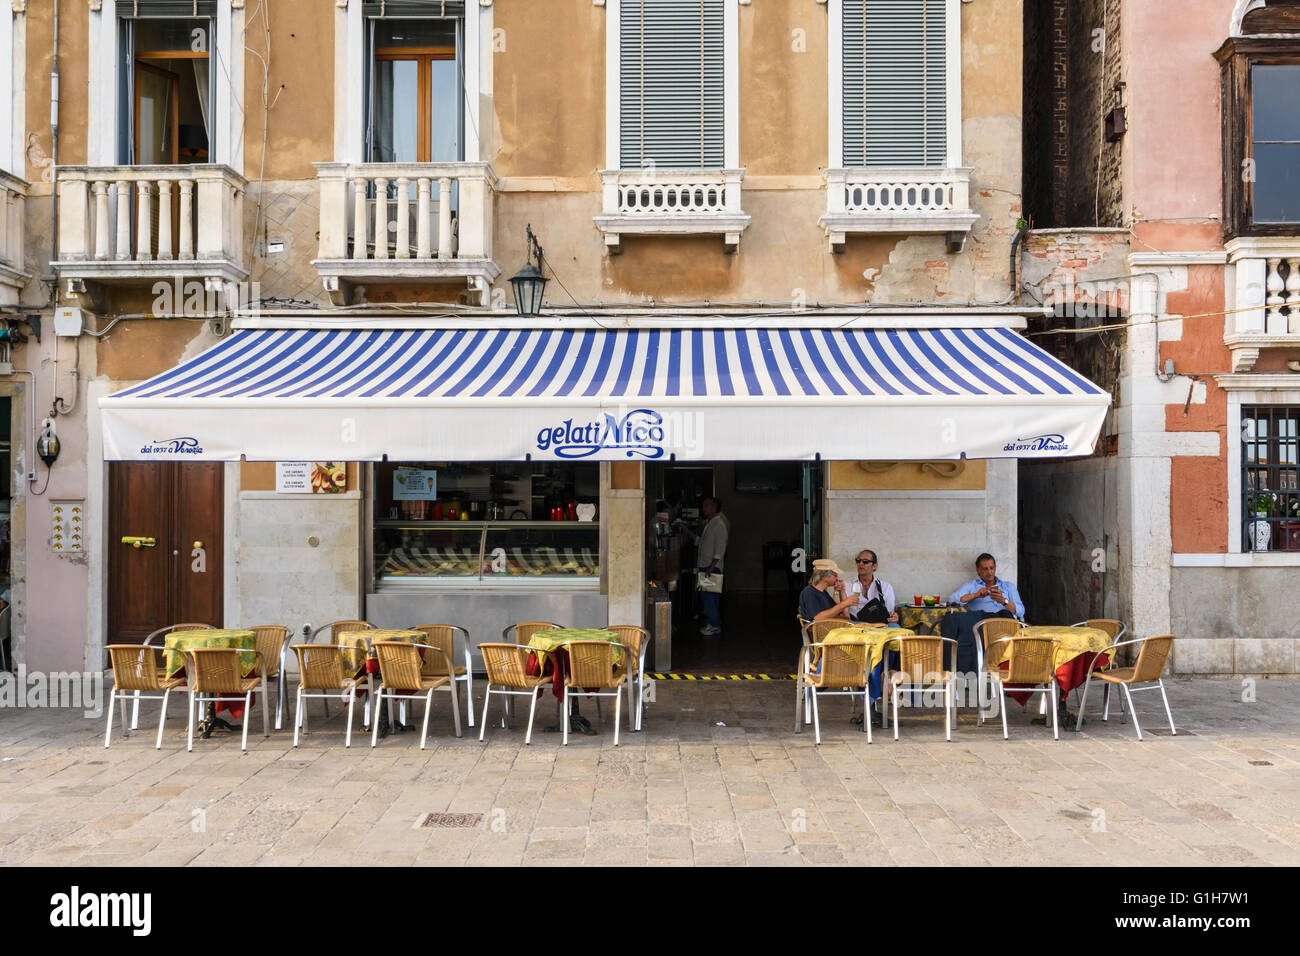 Cafe Bar Gelateria Nico along Fondamenta Zattere al Ponte Longo, Dorsoduro, Venice, Italy Stock Photo